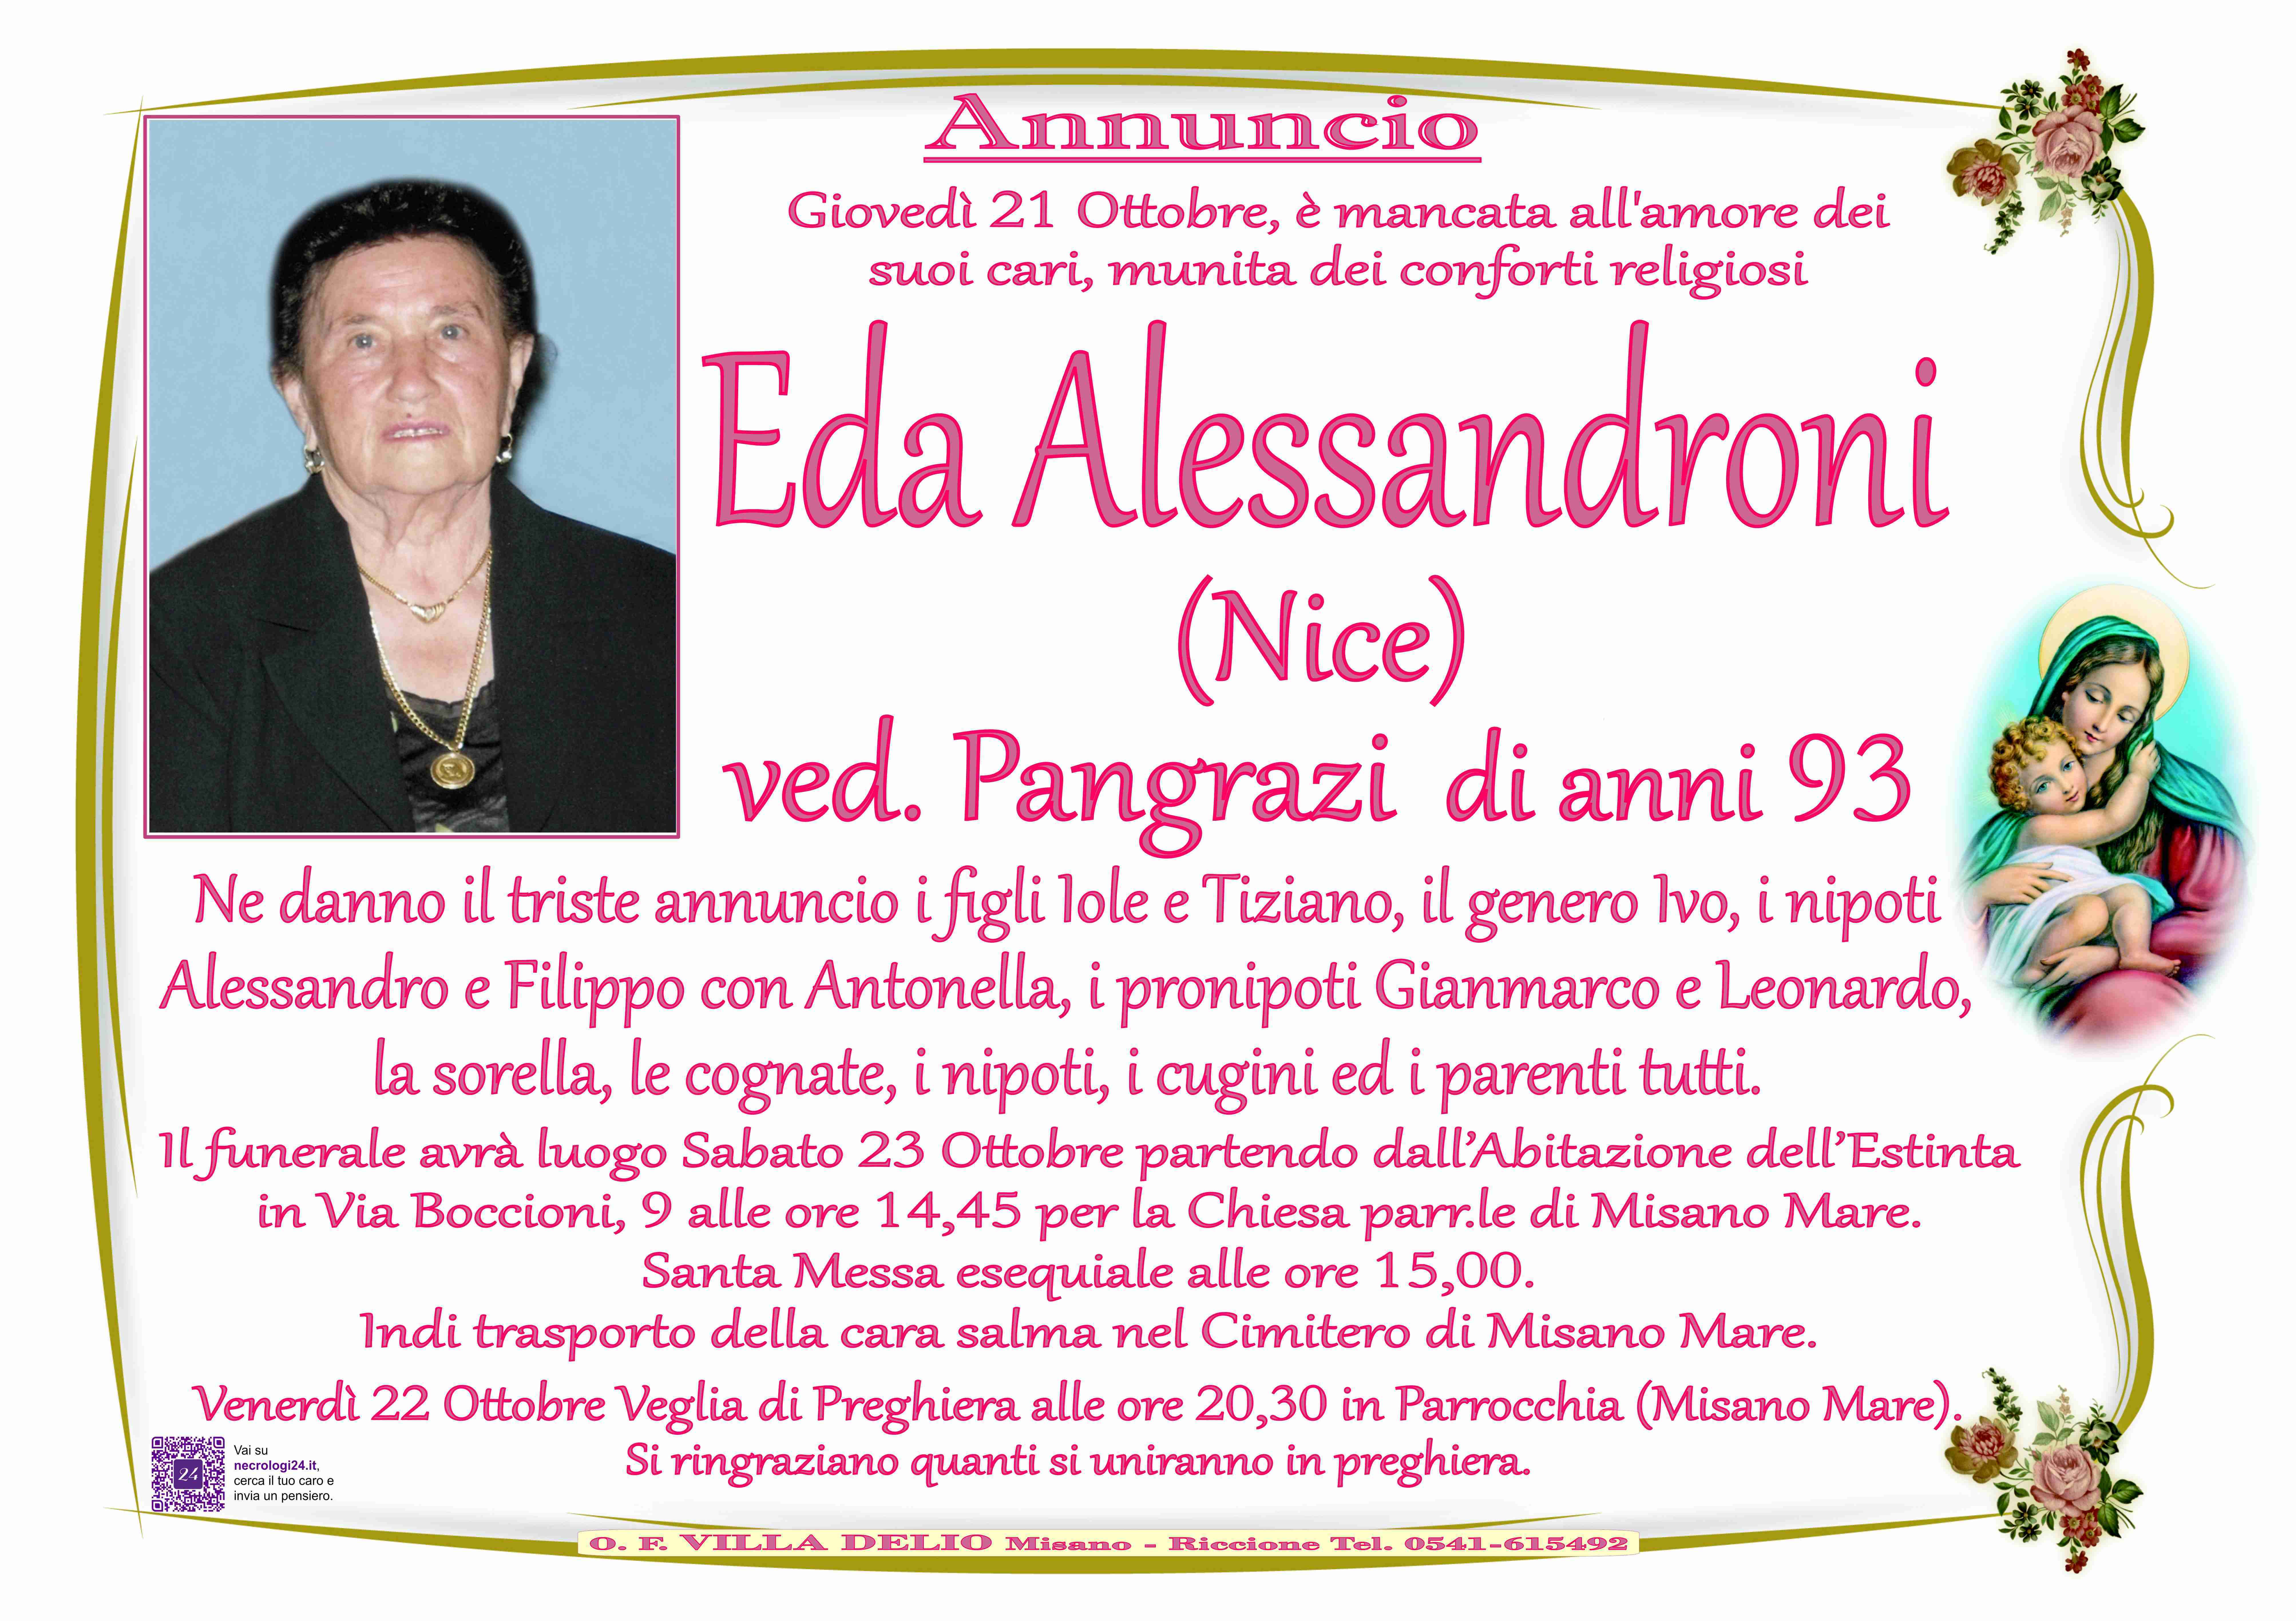 Eda (Nice) Alessandroni